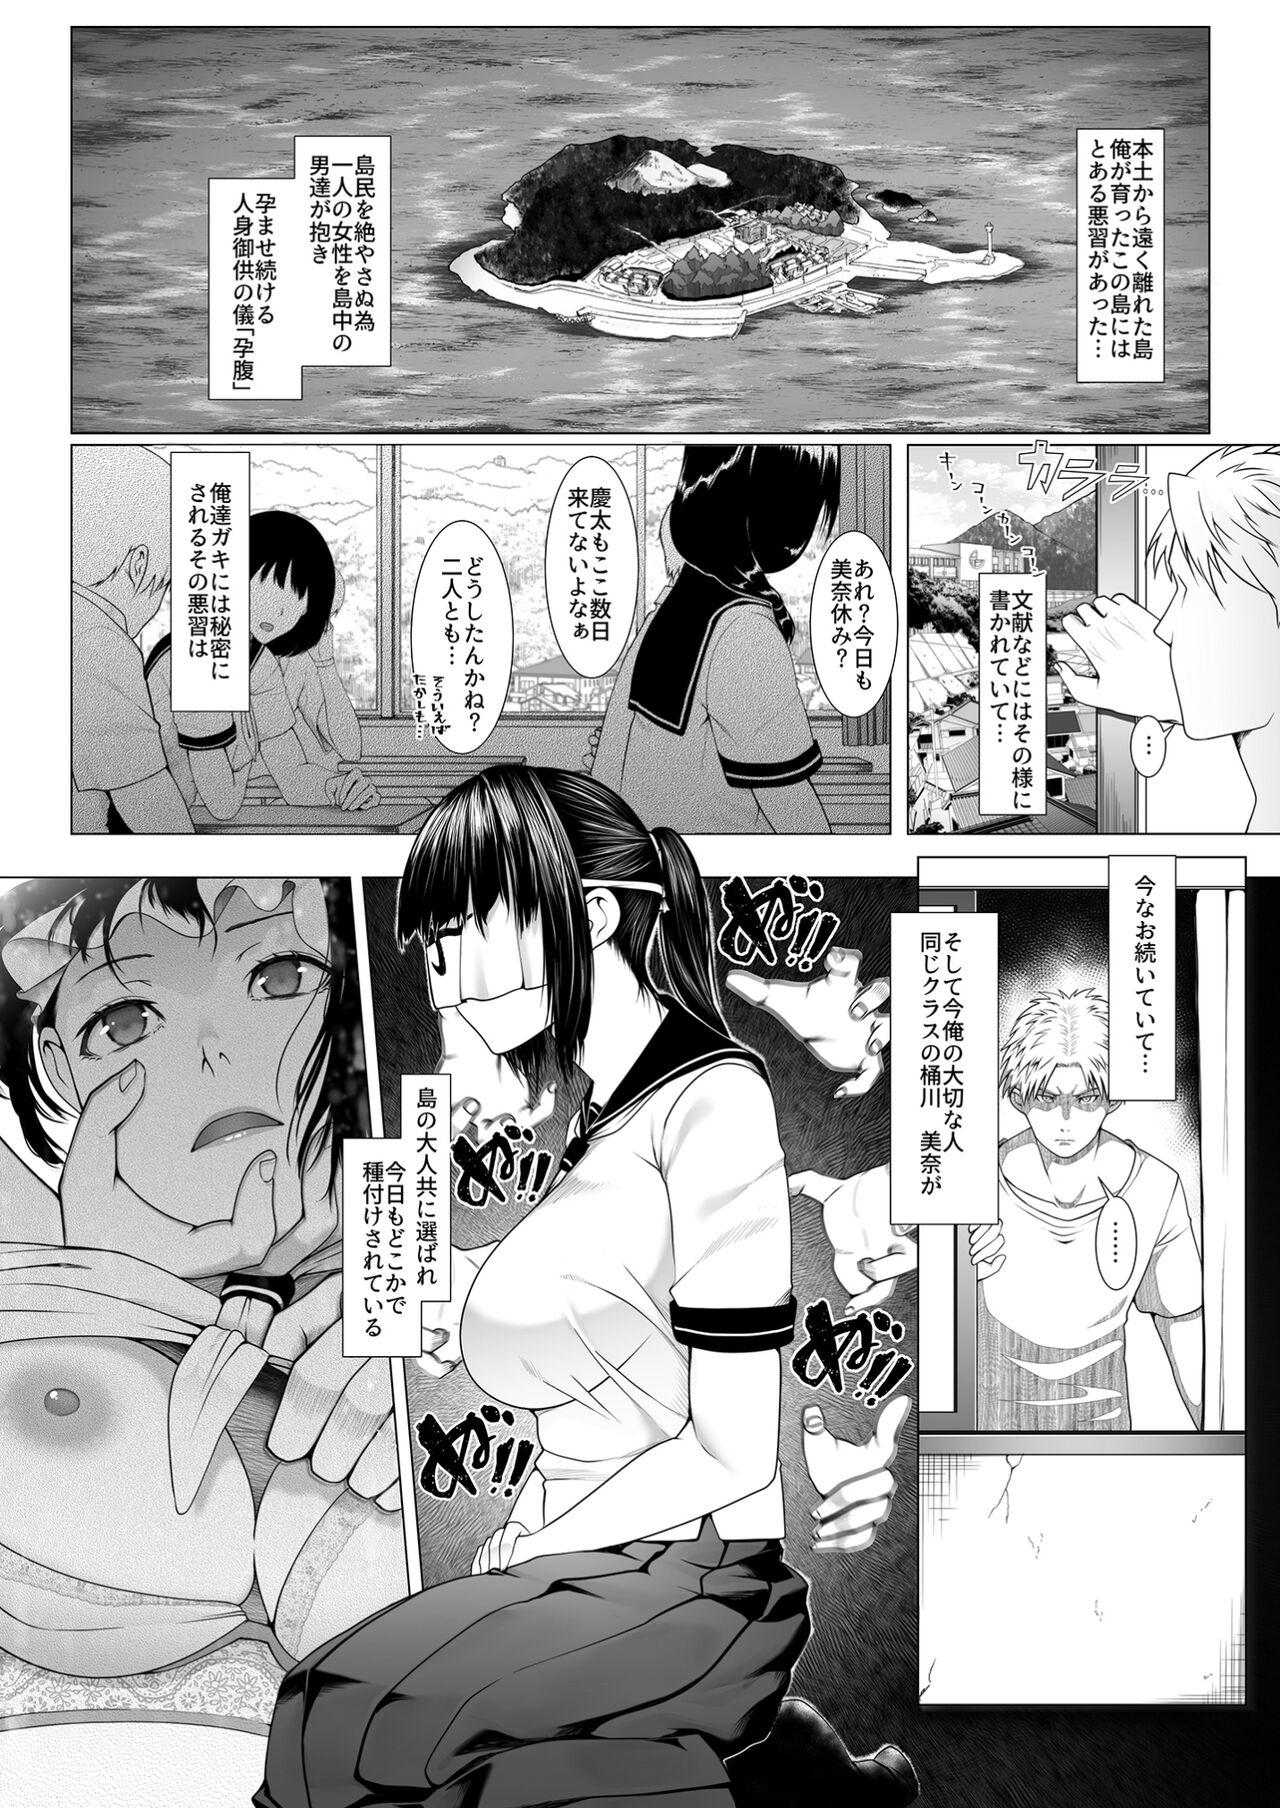 Tall Haramase no Shima 4 - Original Bro - Page 2